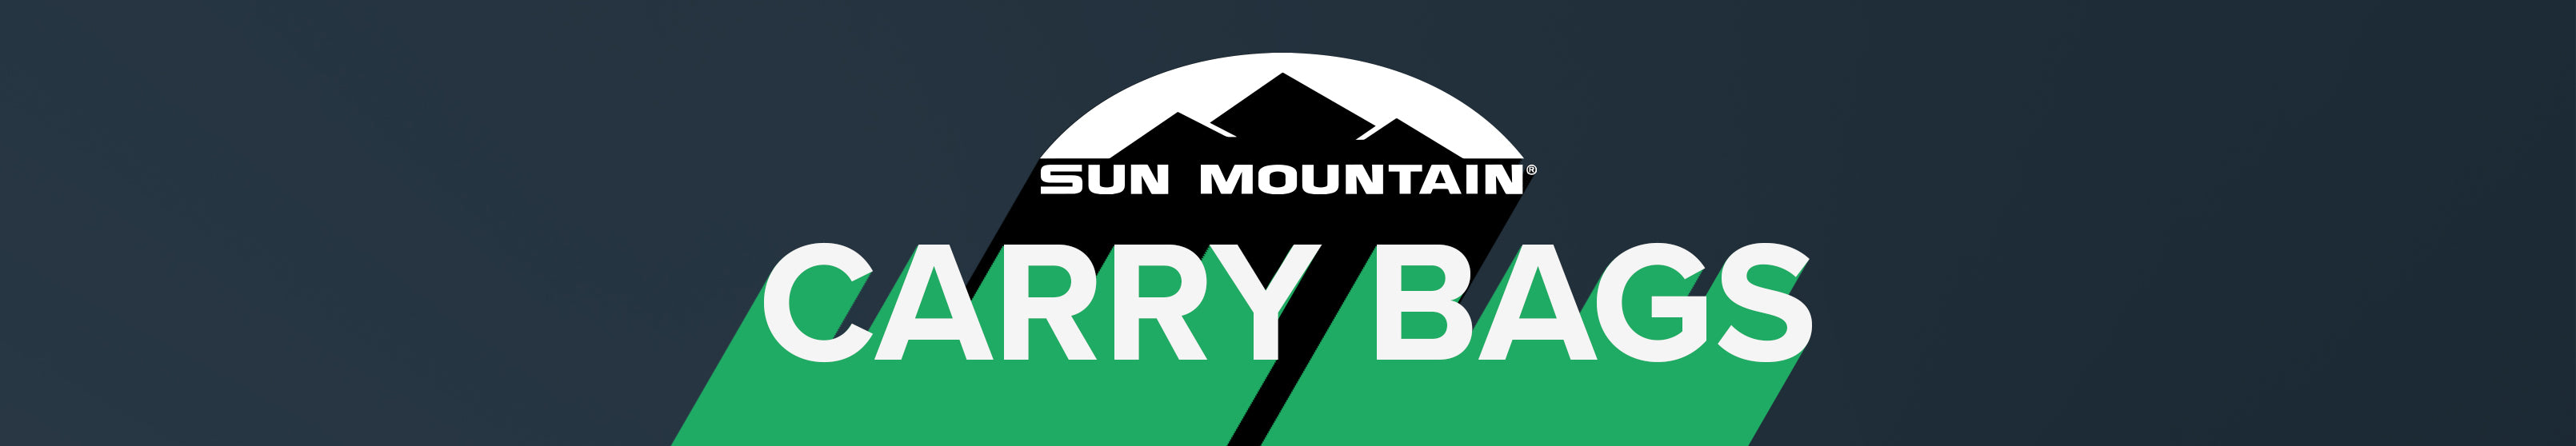 Sun Mountain Carry Bags